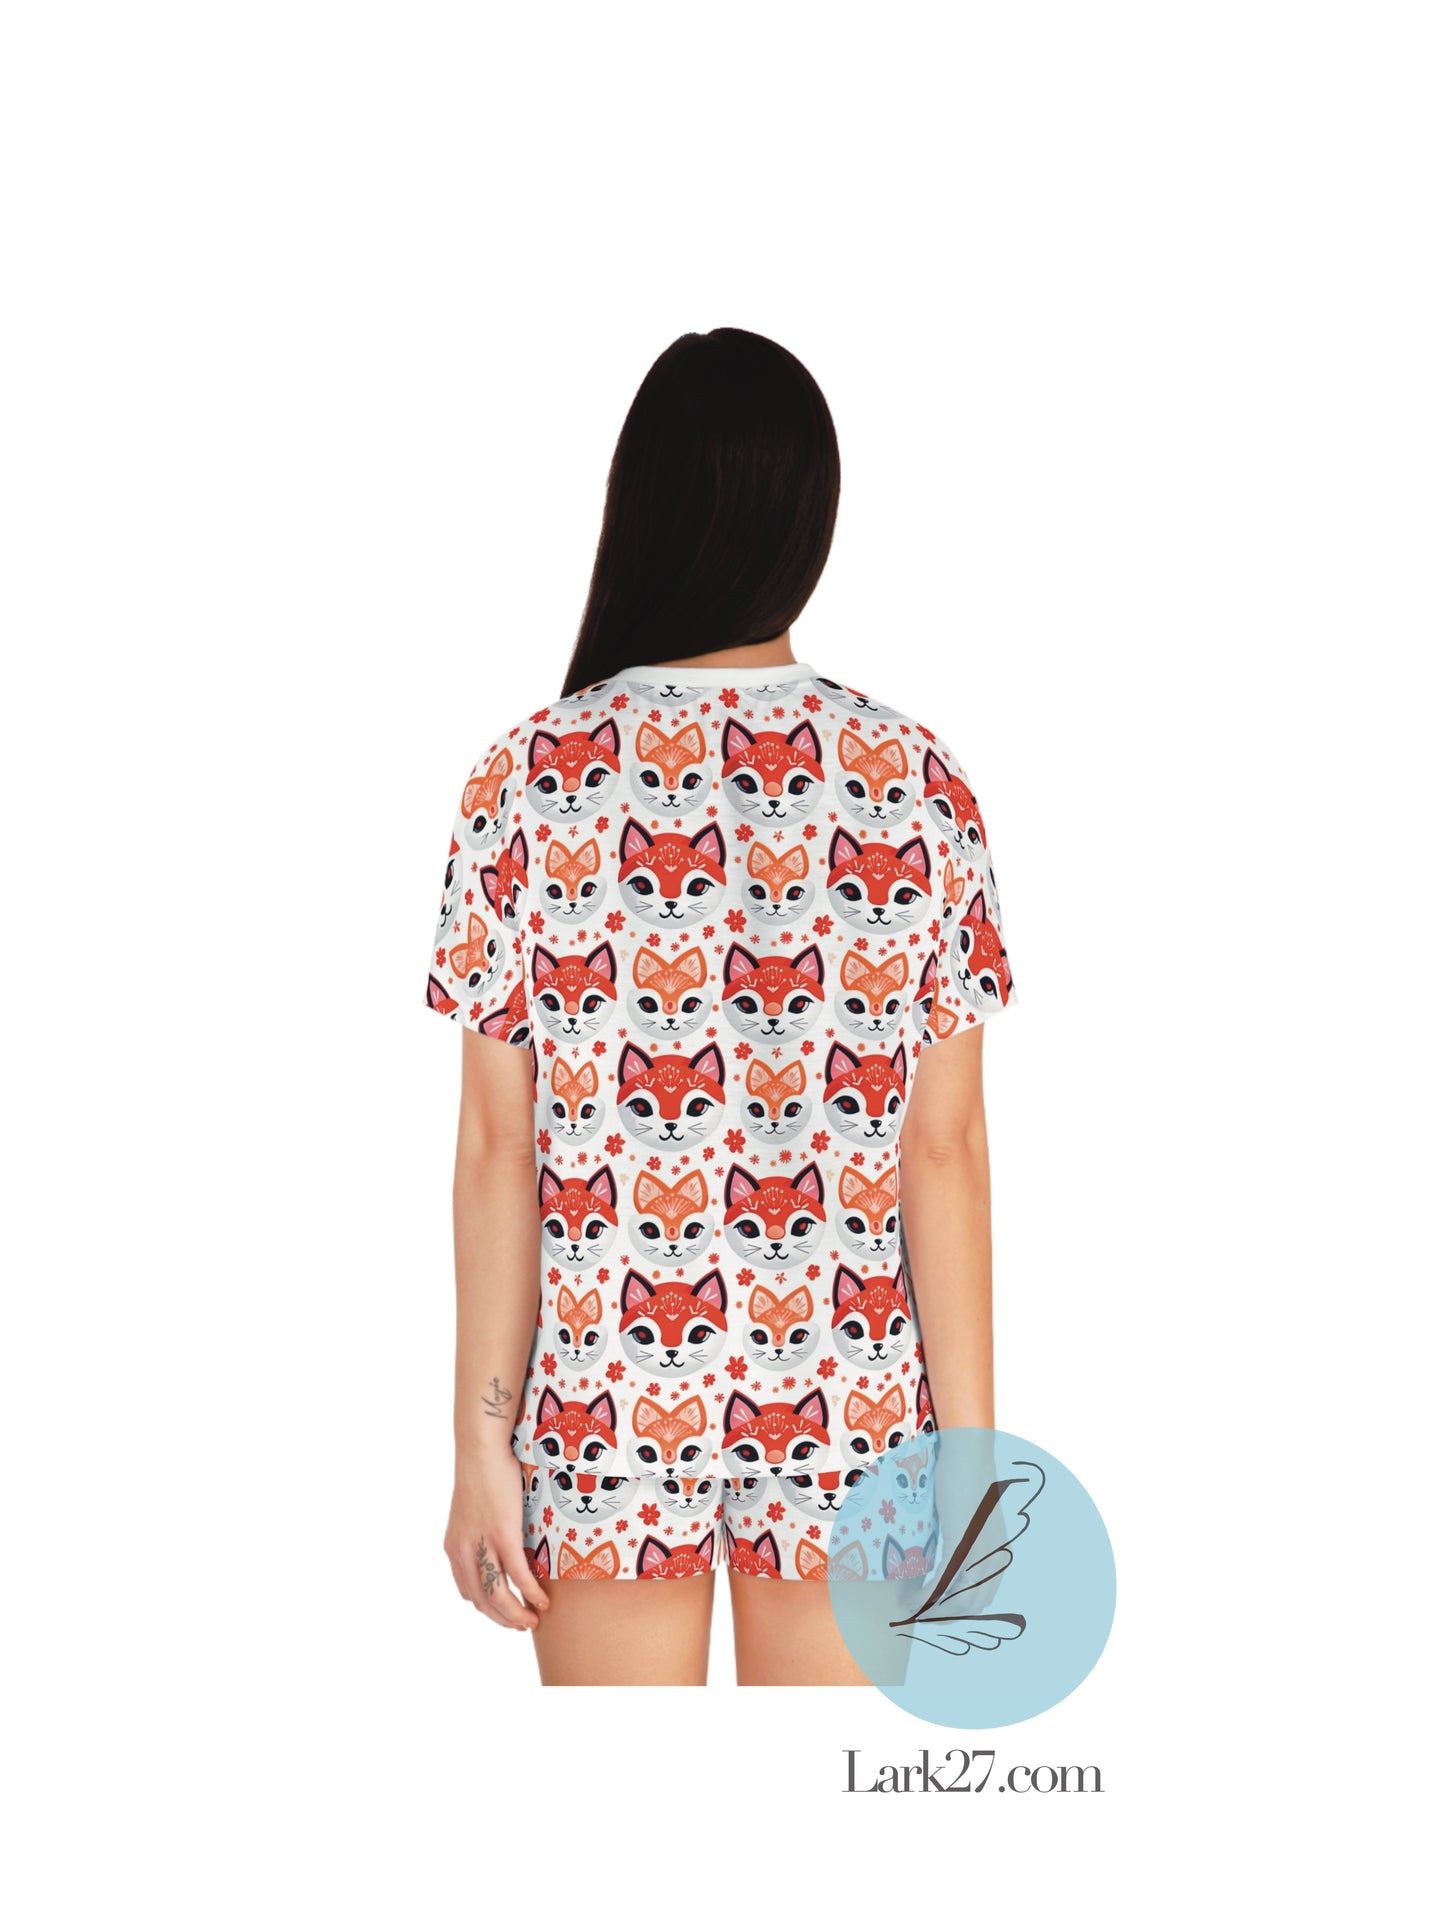 Kitsune's Mischief Light Version, Women's Short Pajama Set